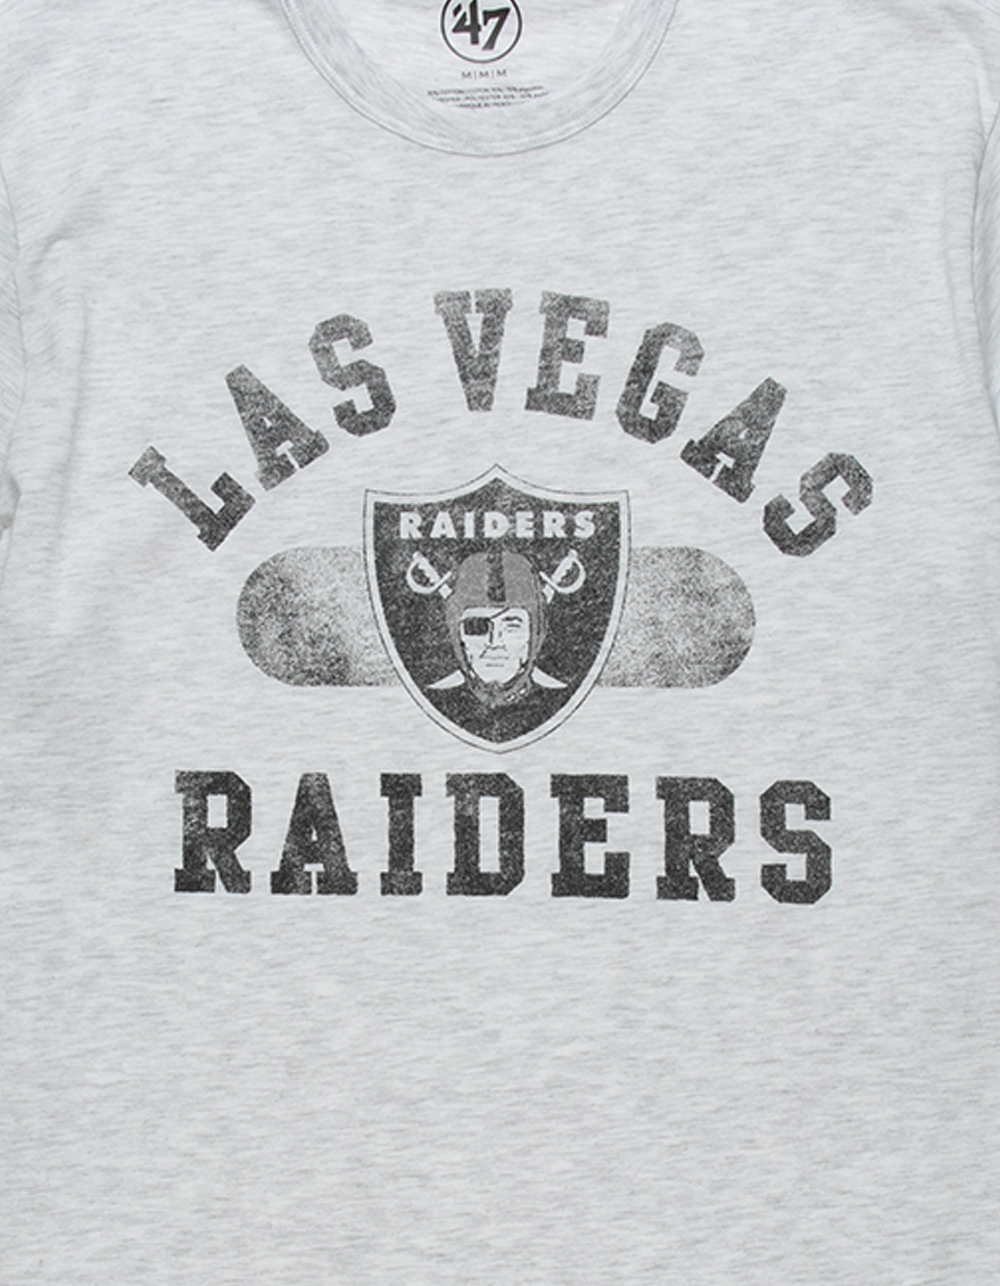 raiders 47 jersey